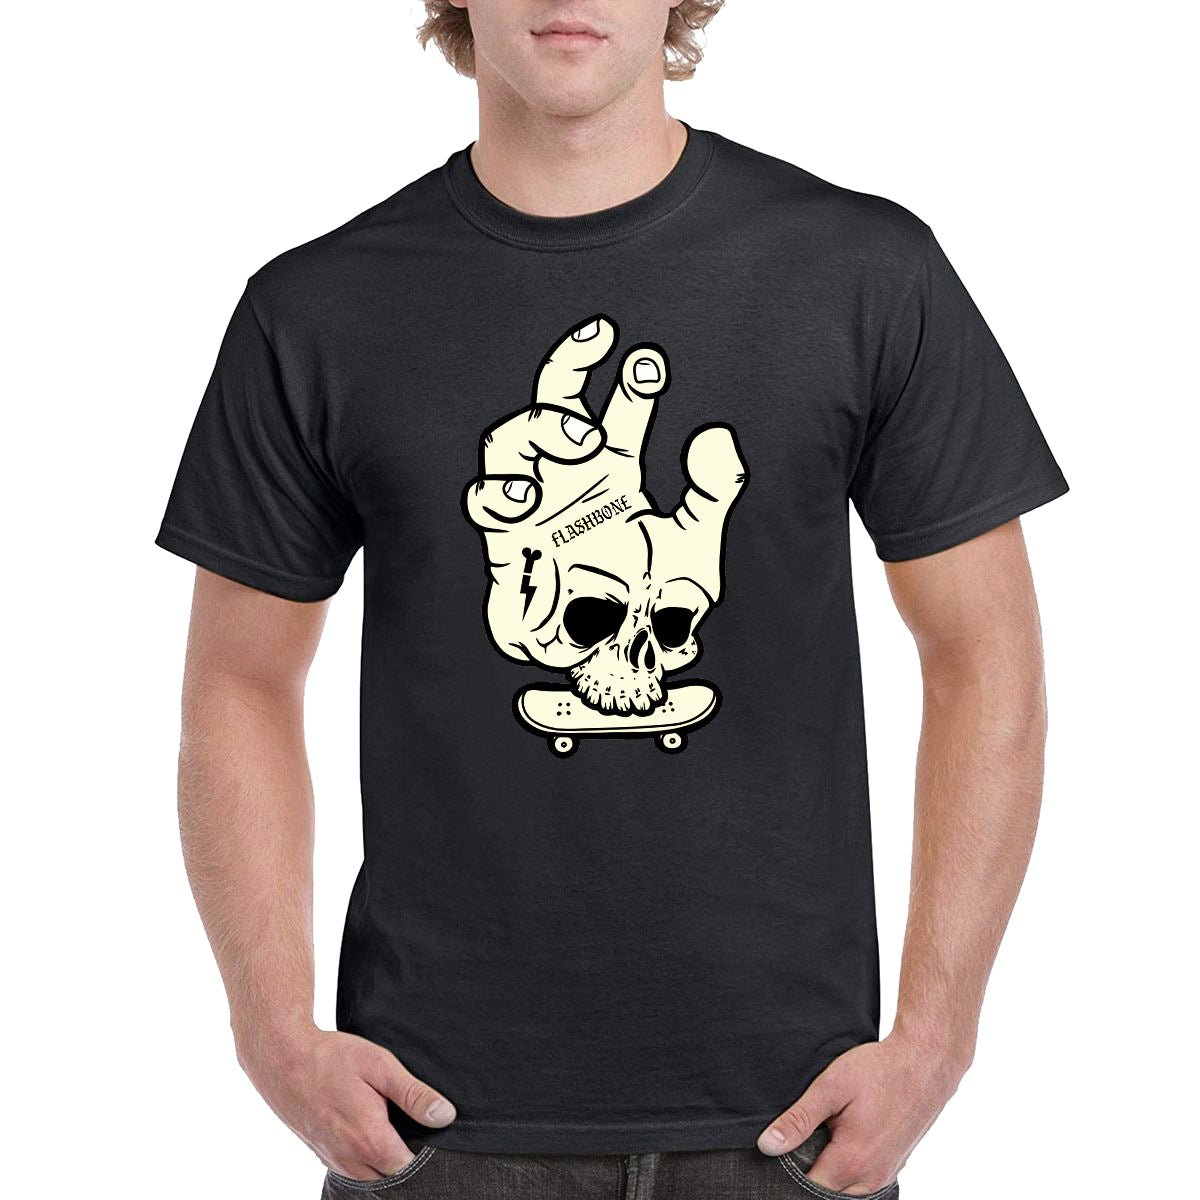 FlashBone "Handfreak" T-Shirt (Black) front & back print